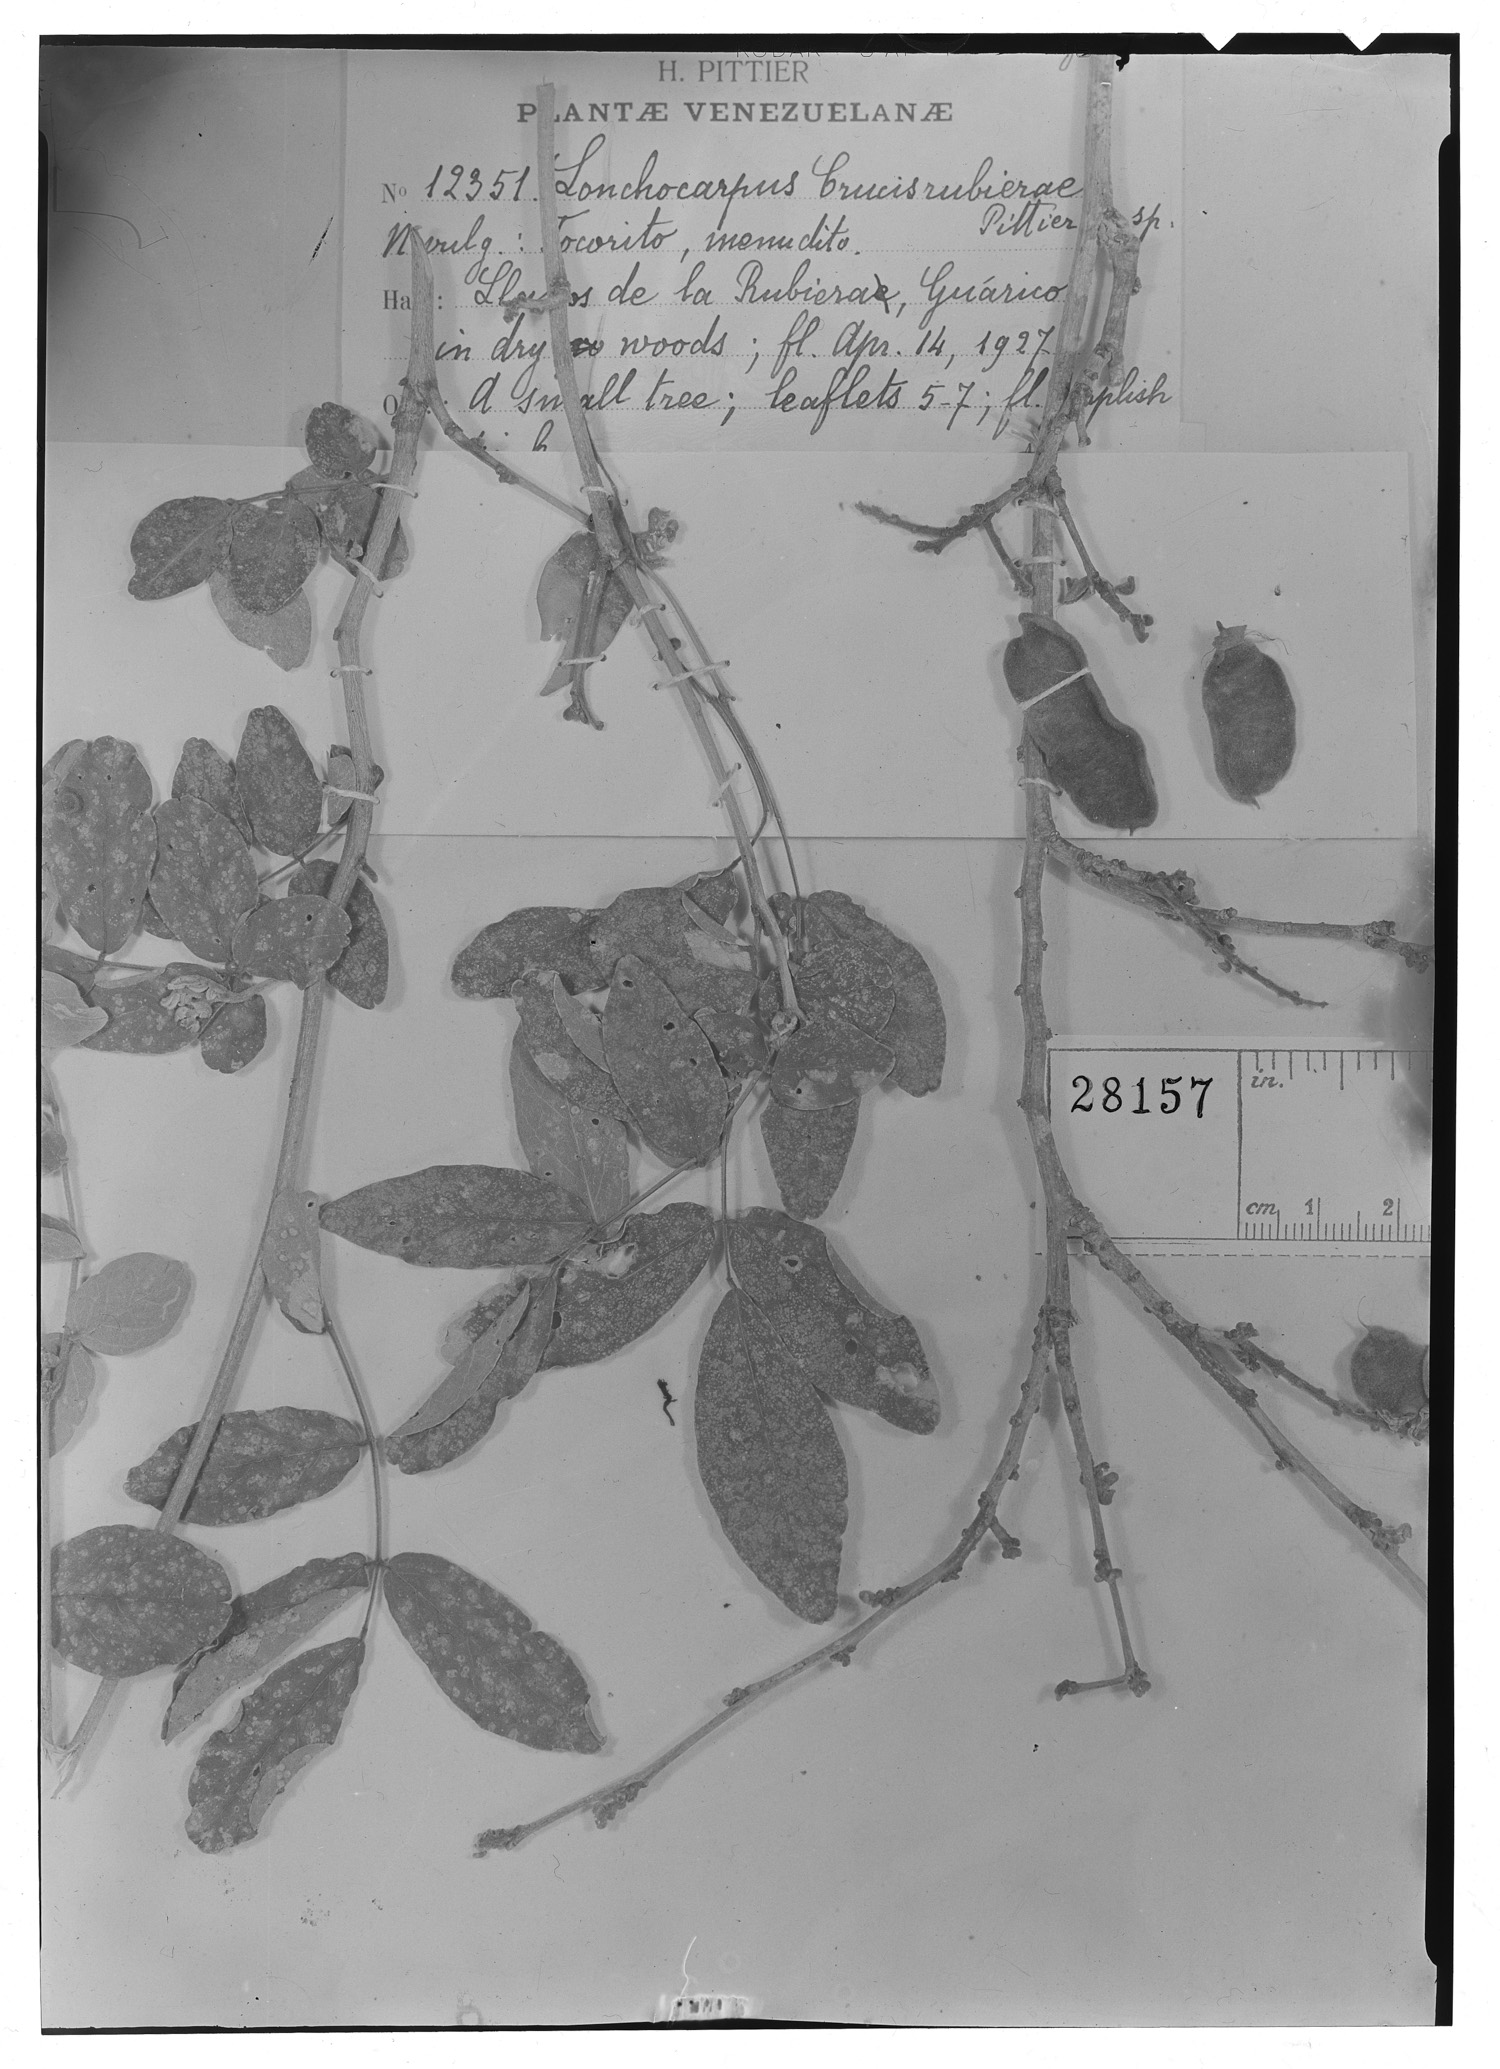 Lonchocarpus crucisrubierae image